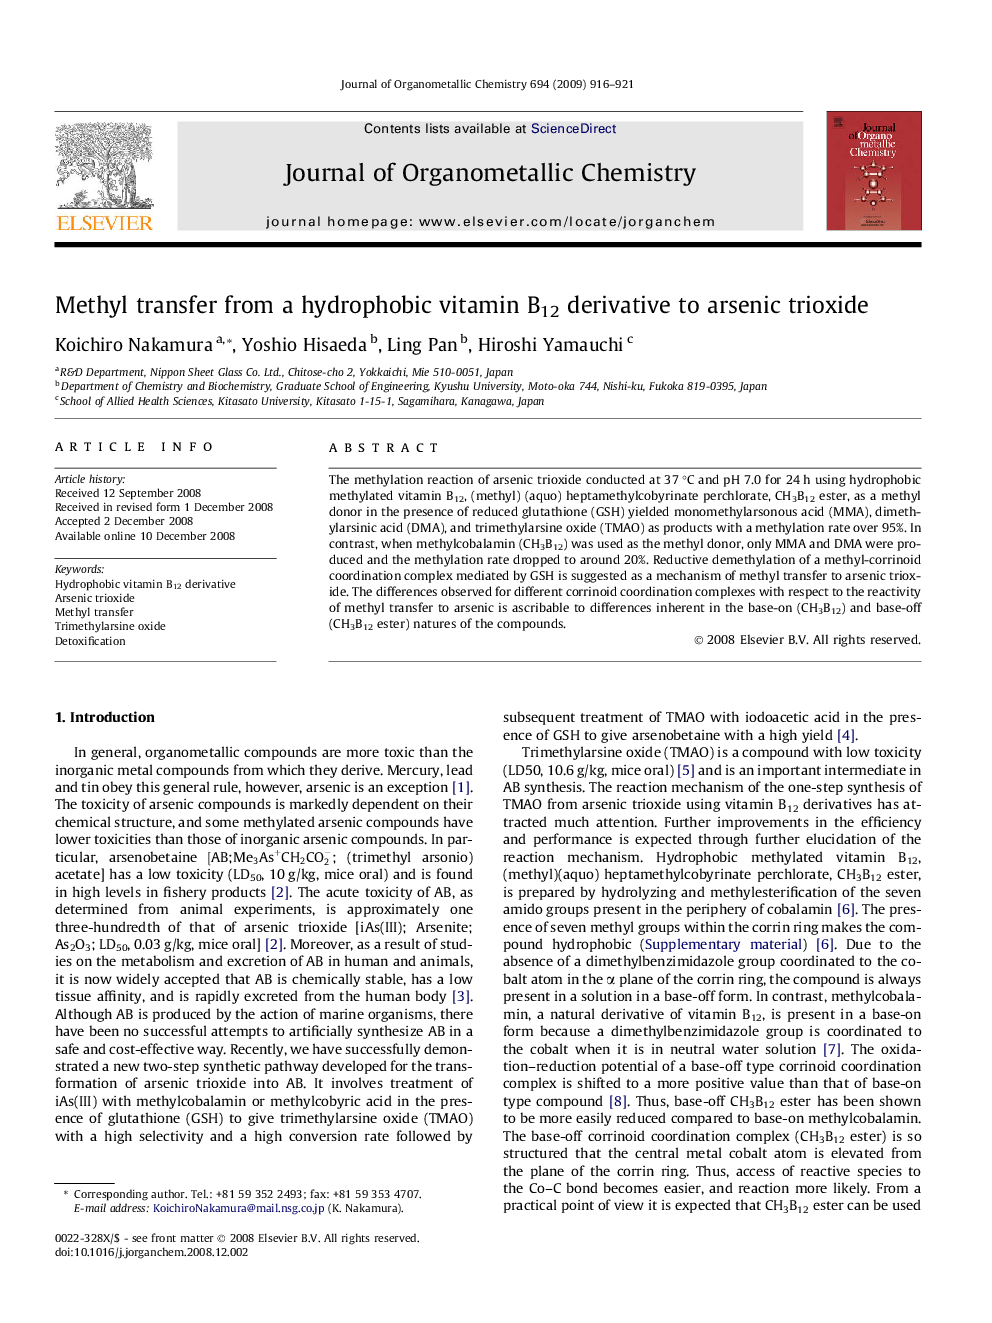 Methyl transfer from a hydrophobic vitamin B12 derivative to arsenic trioxide